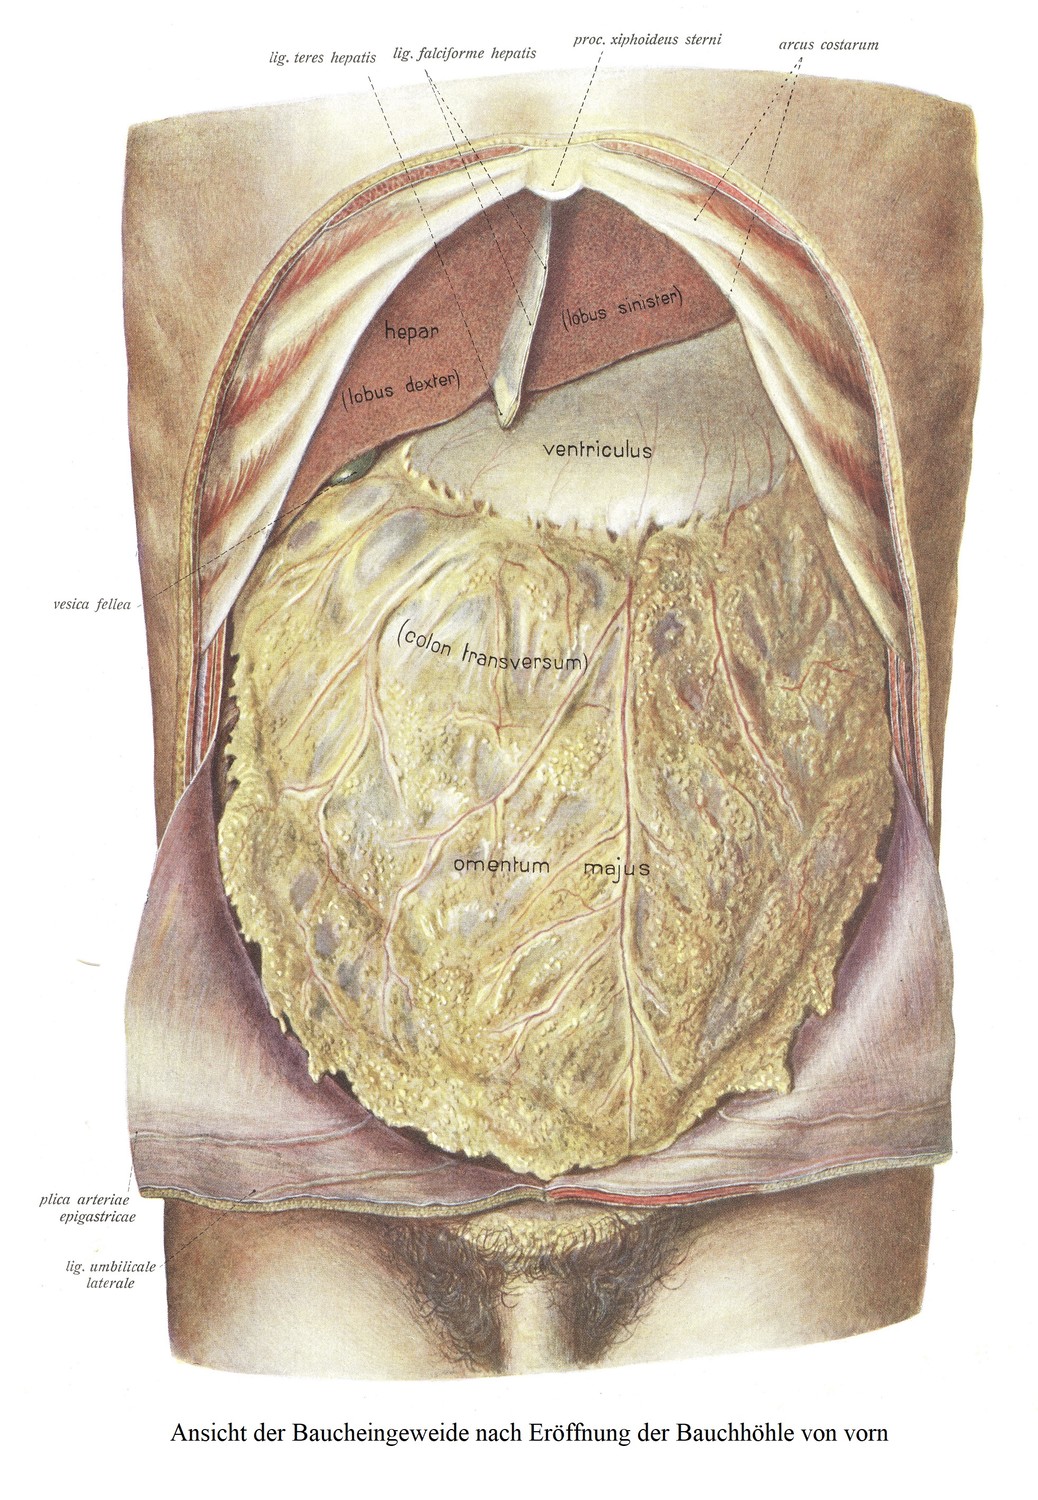 Передний вид органов брюшной полости после вскрытия брюшной полости.